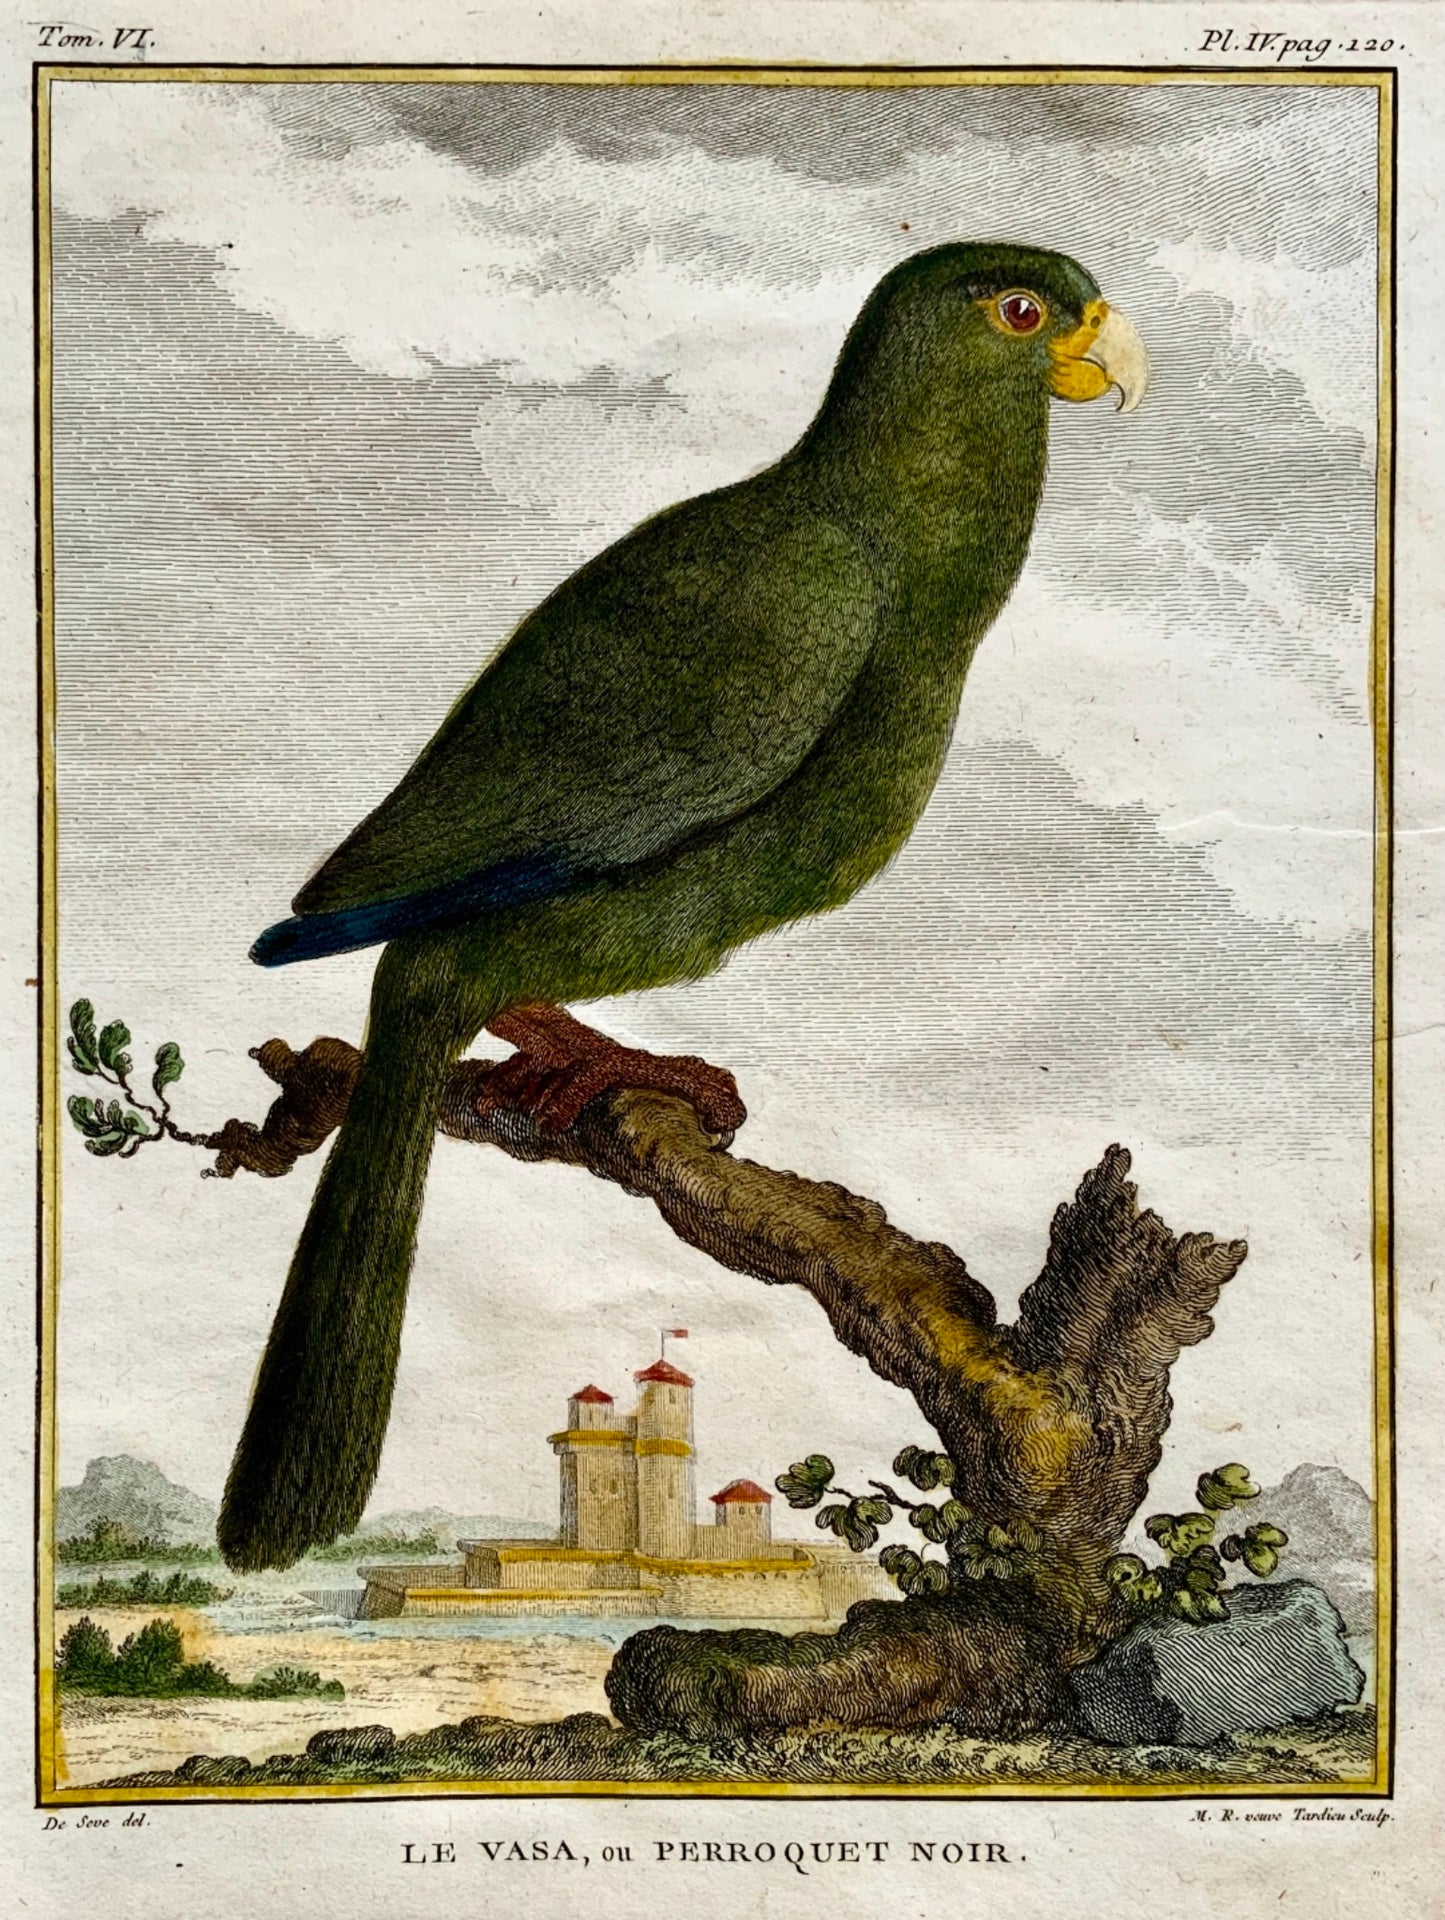 1779 Haussard after Jacques de Seve - Vasa Parrot - 4to engraving - Ornithology